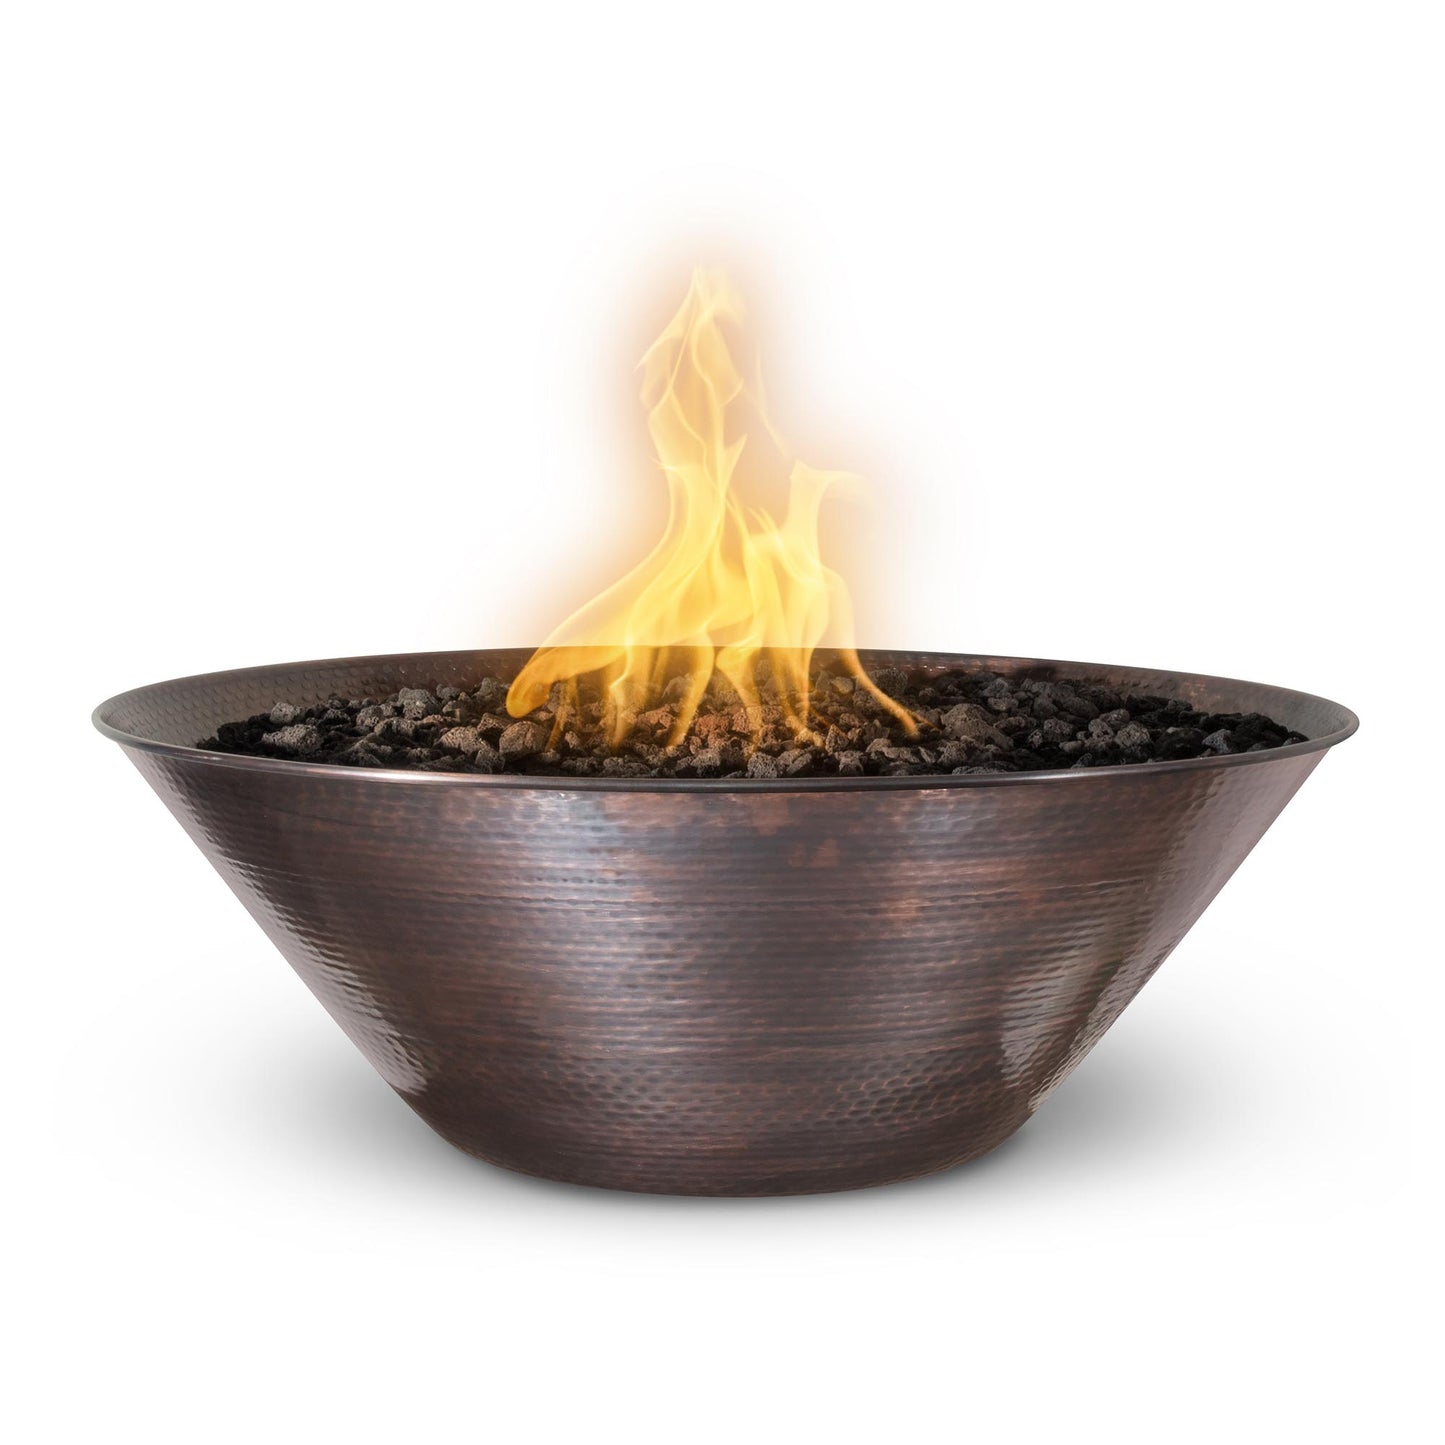 The Outdoor Plus Remi Copper Fire Bowl